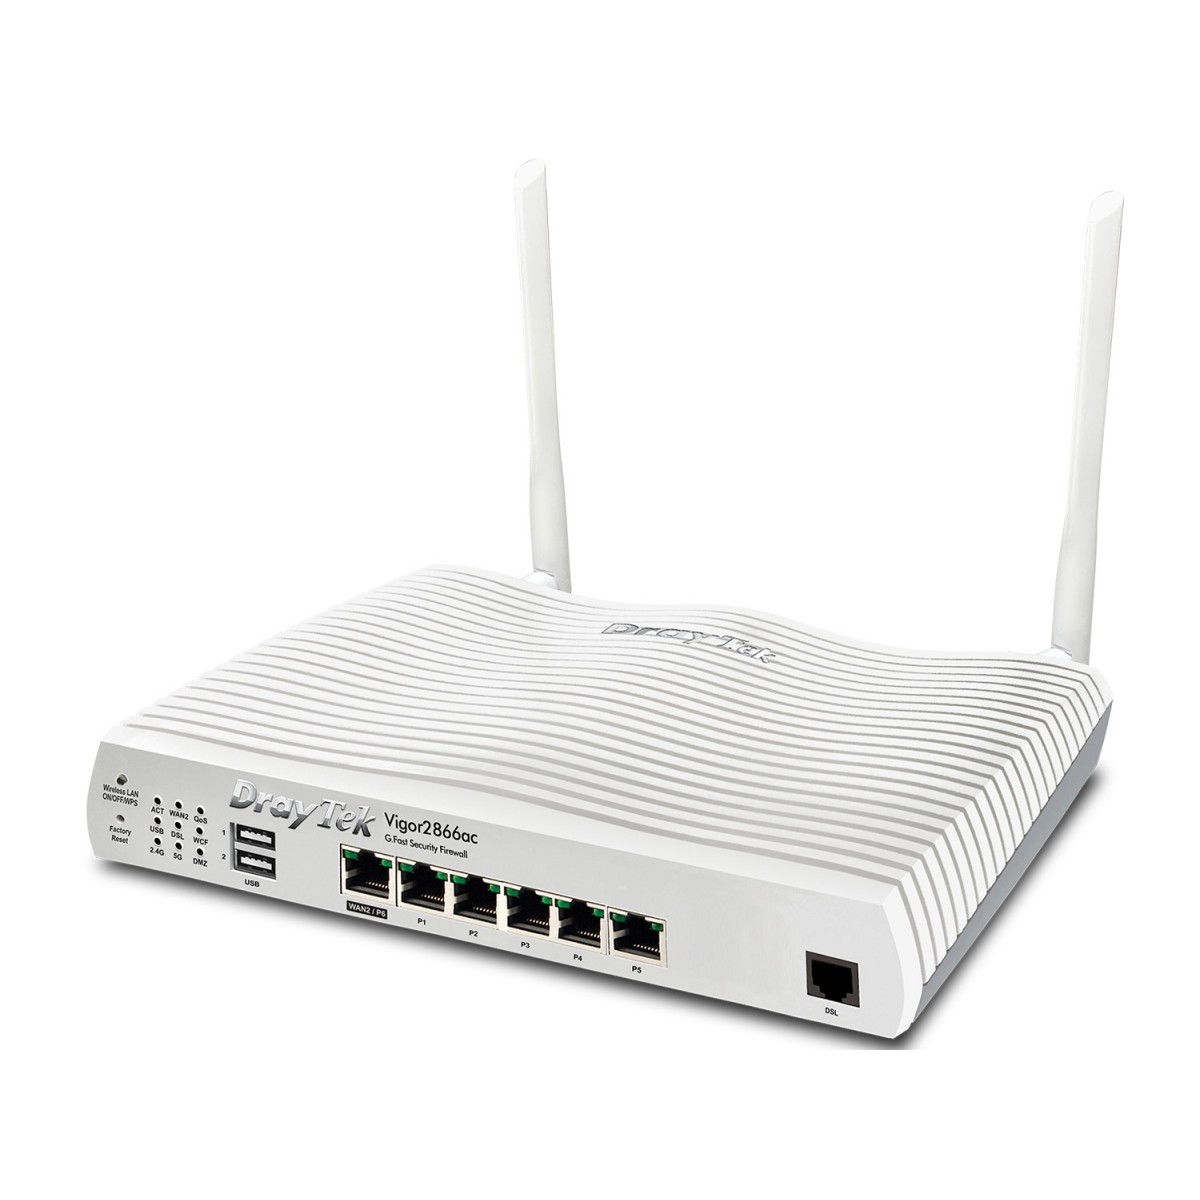 Draytek Vigor 2866ax WLAN-AC ModemR. ADSL2+/VDSL2/G.Fast retail - WLAN